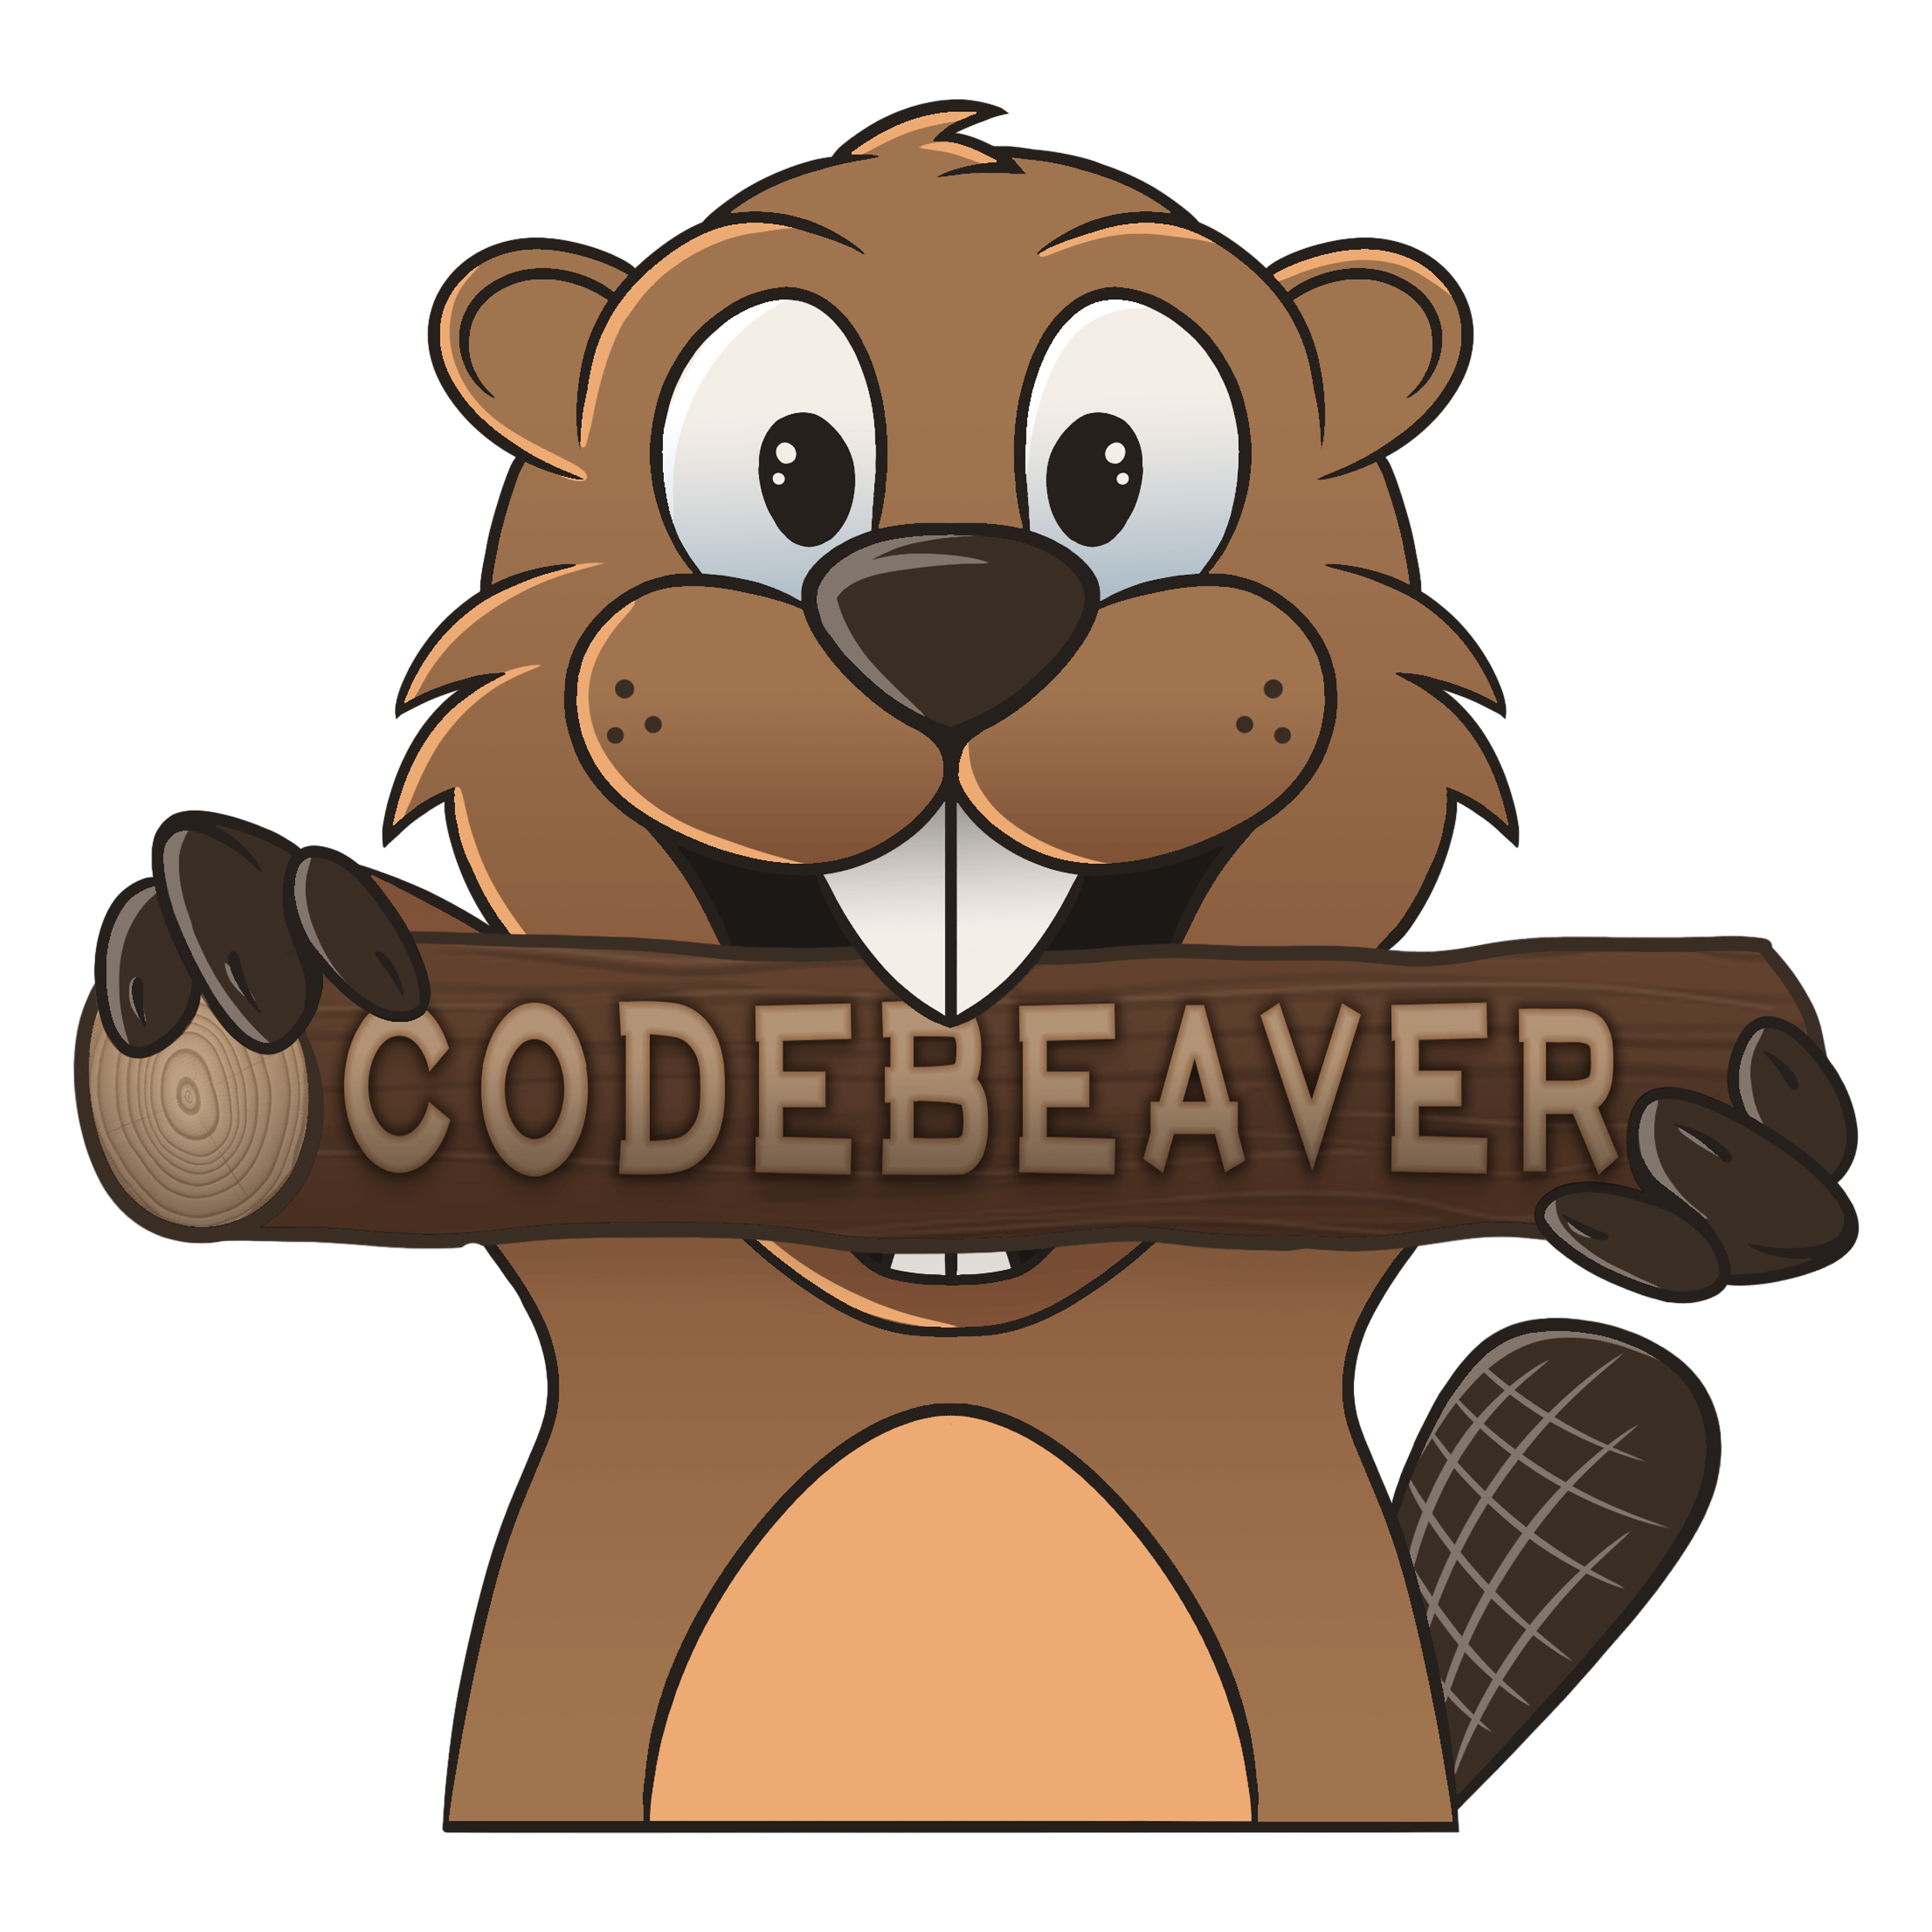 codebeaver-logo-image